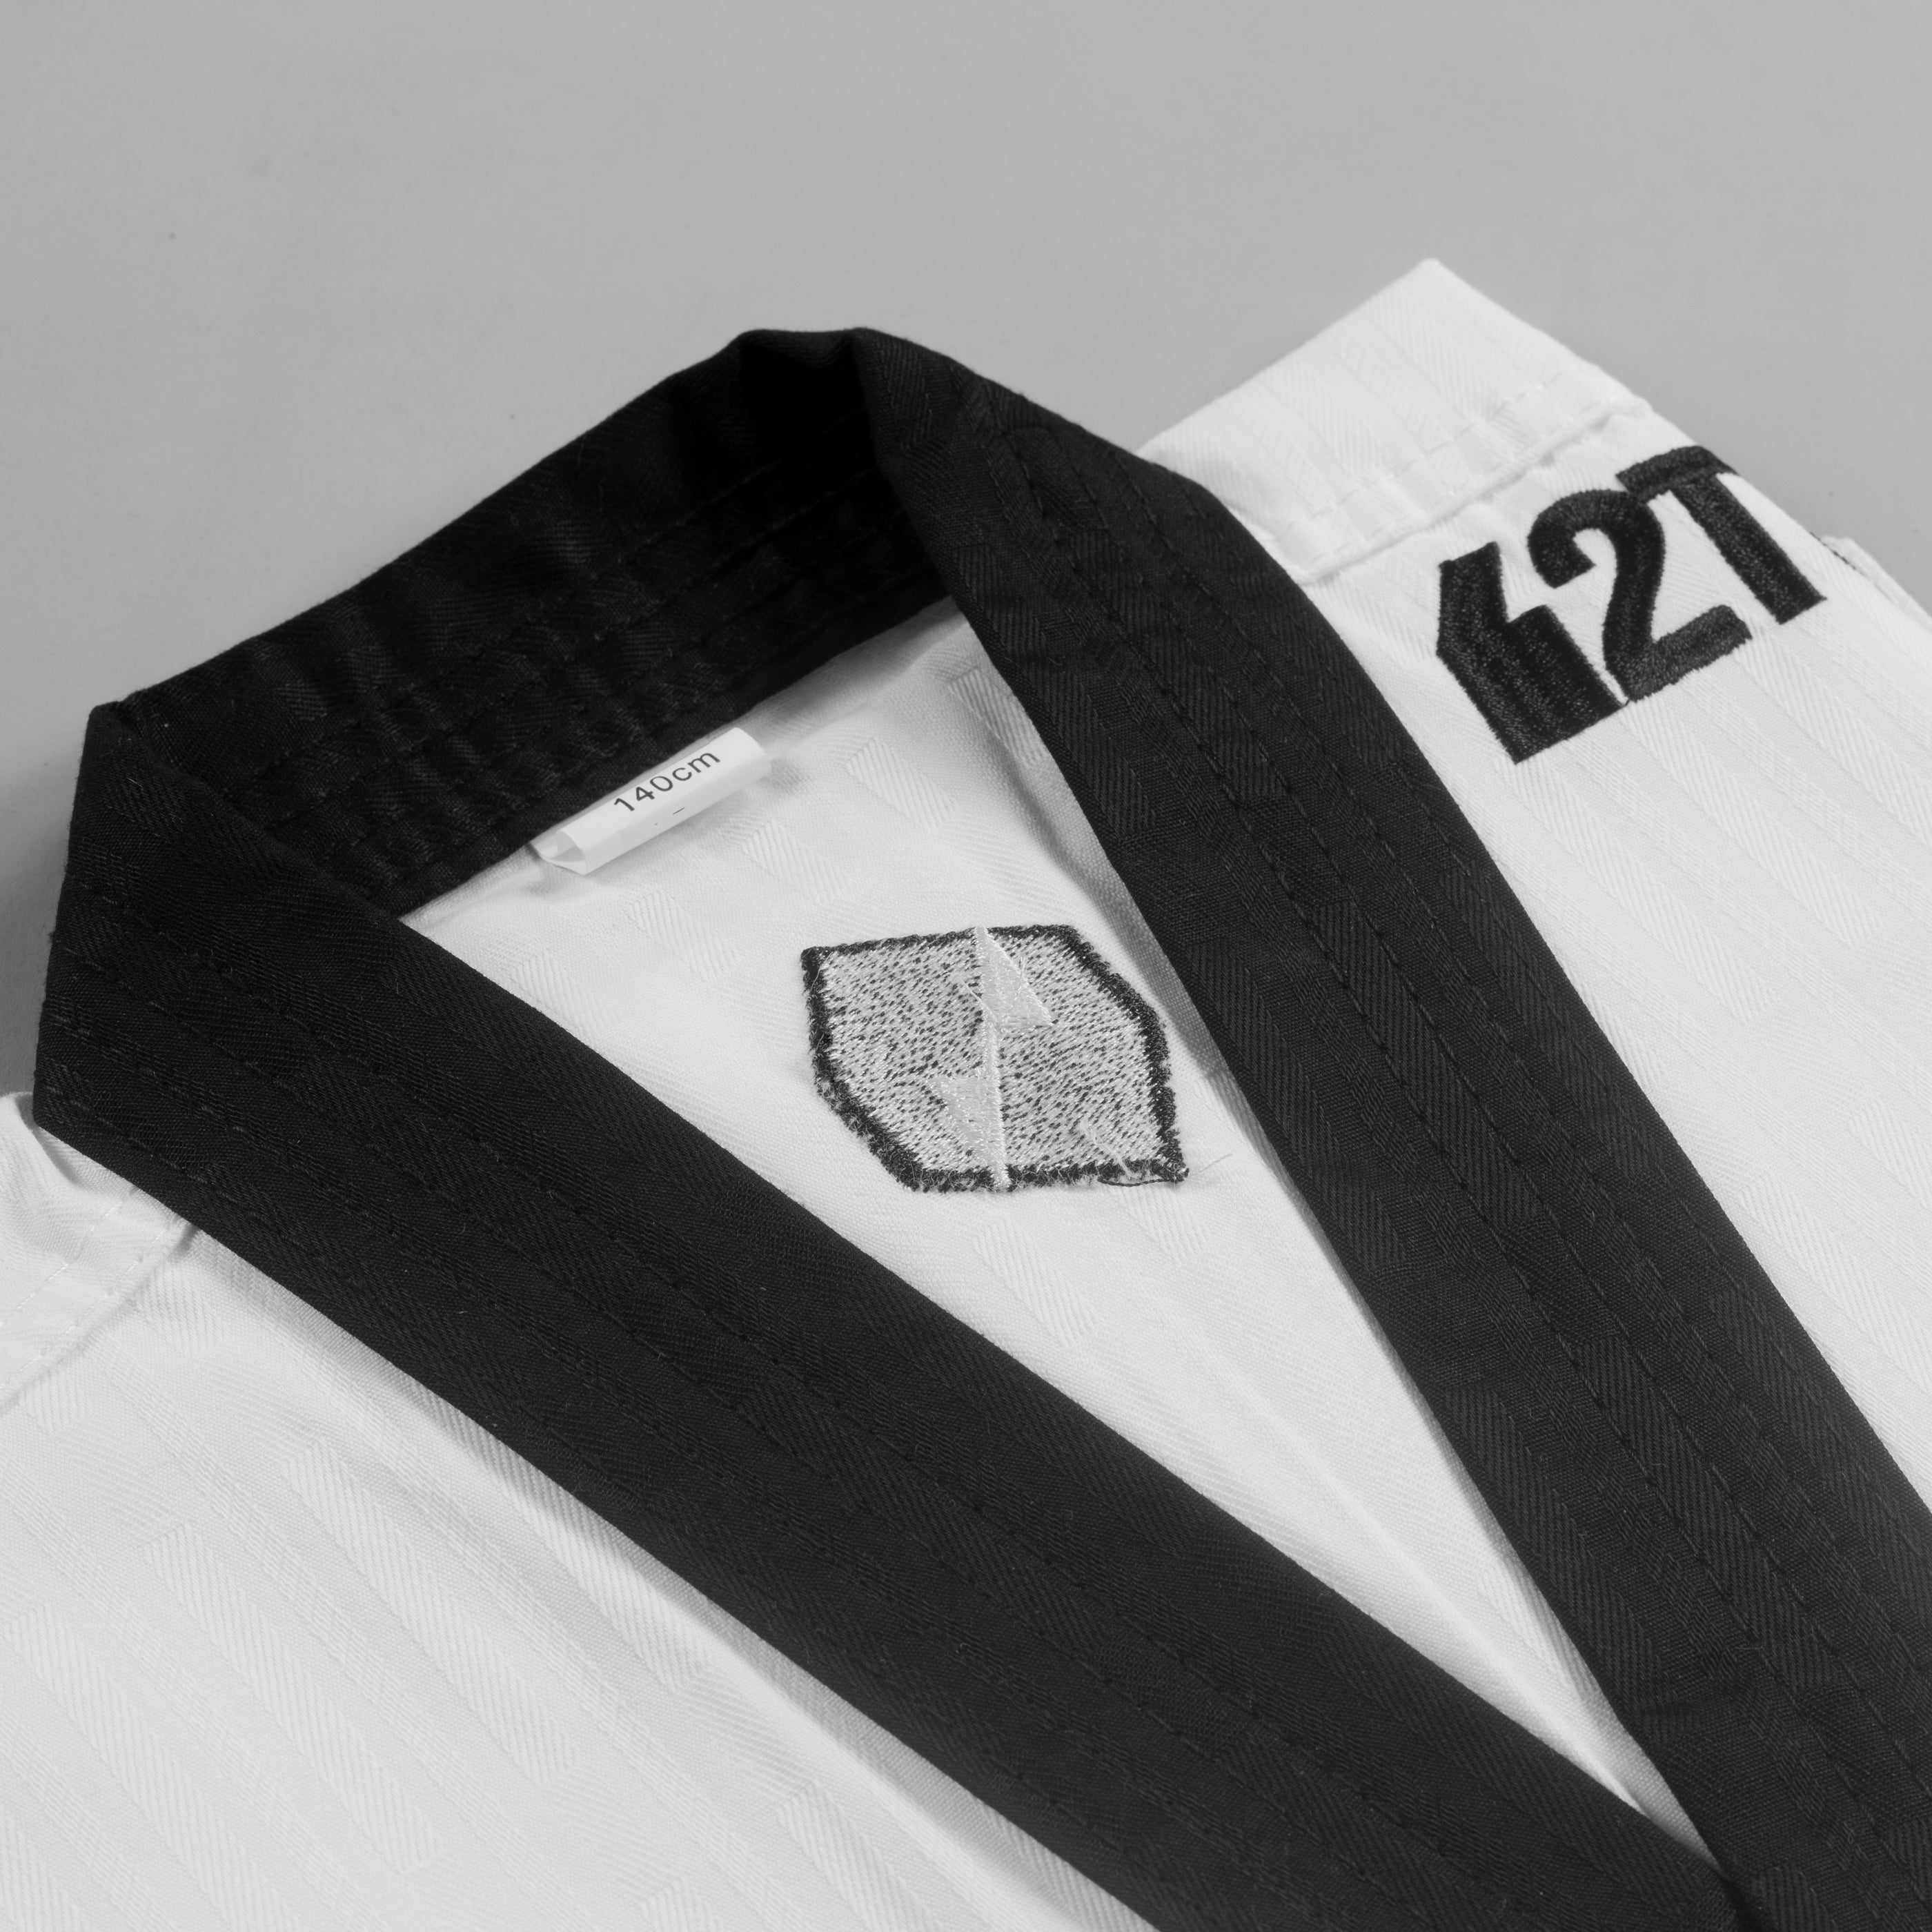 'Vintage' Taekwondo Dobok Uniform - White/Black 2TUF2TAP